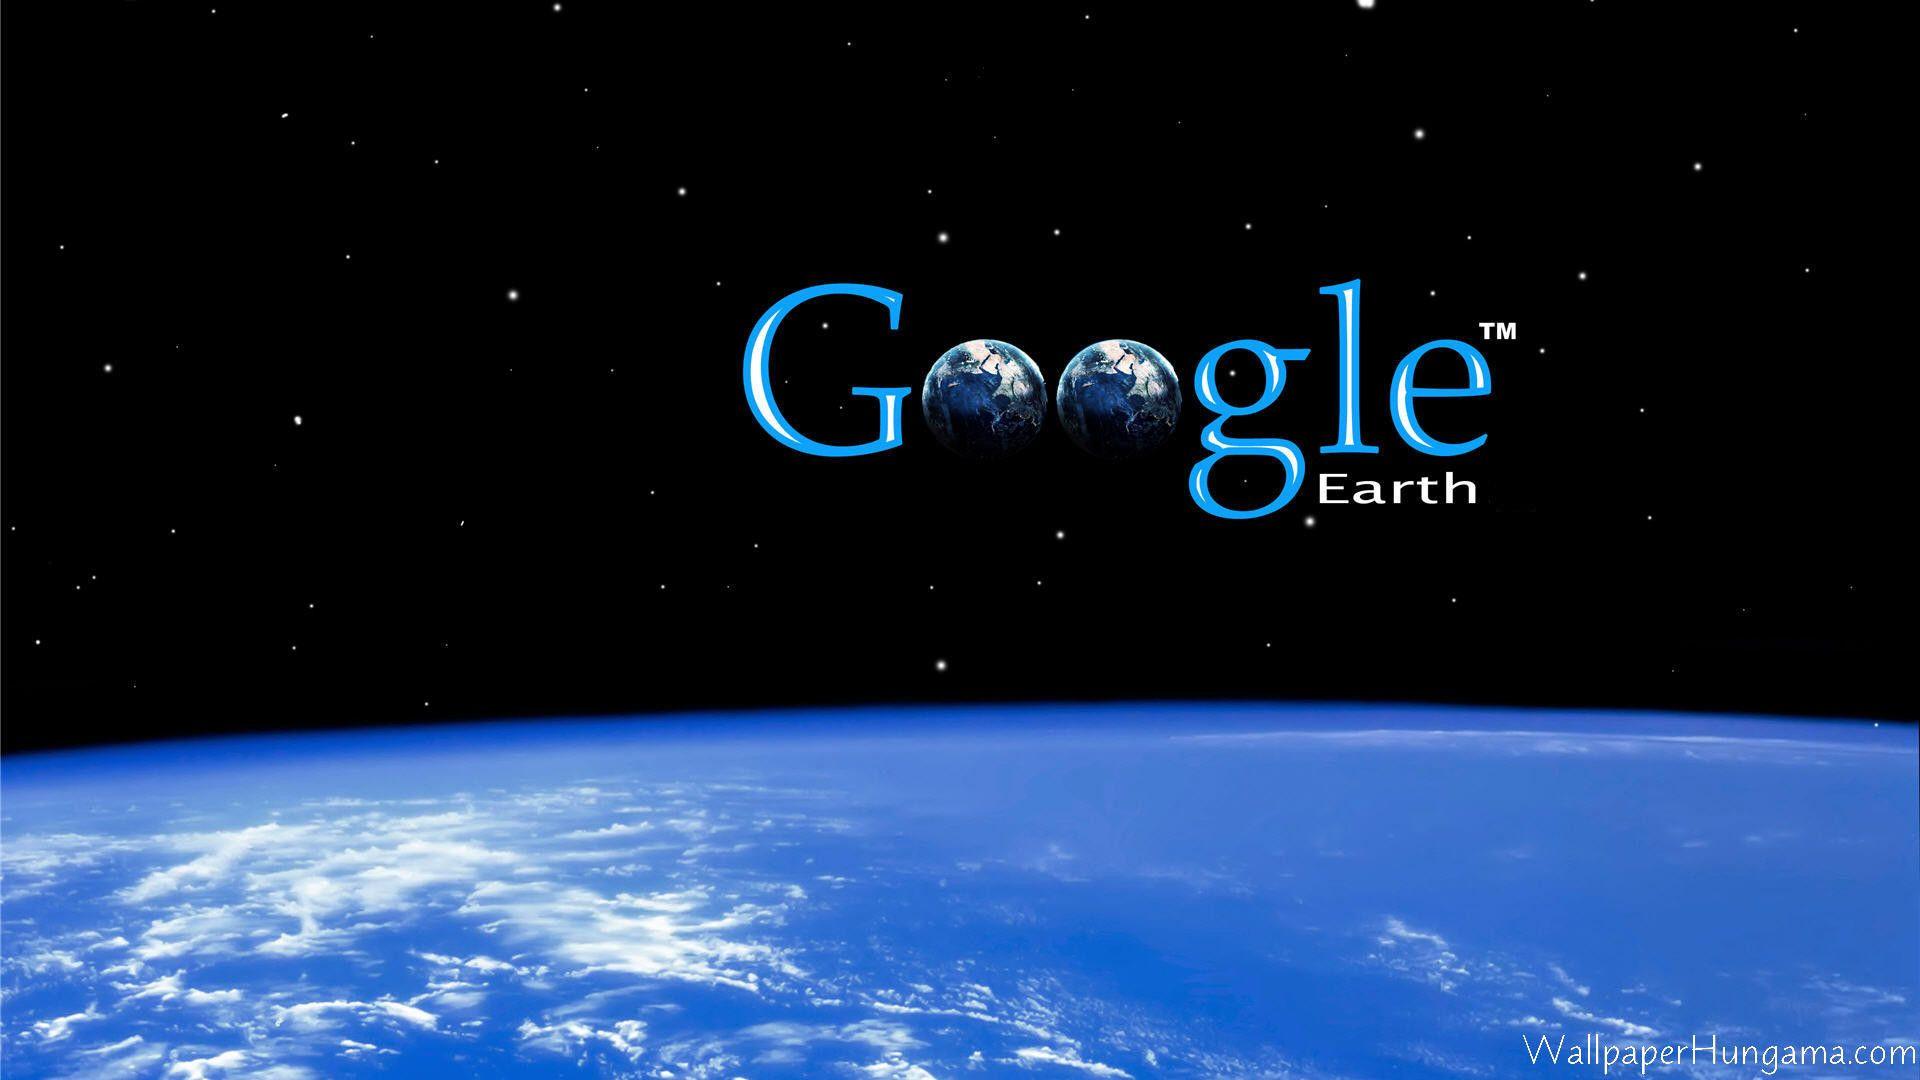 Google Earth Logo - How To Install Google Earth In Ubuntu 15.04 64 Bit On Ubuntu